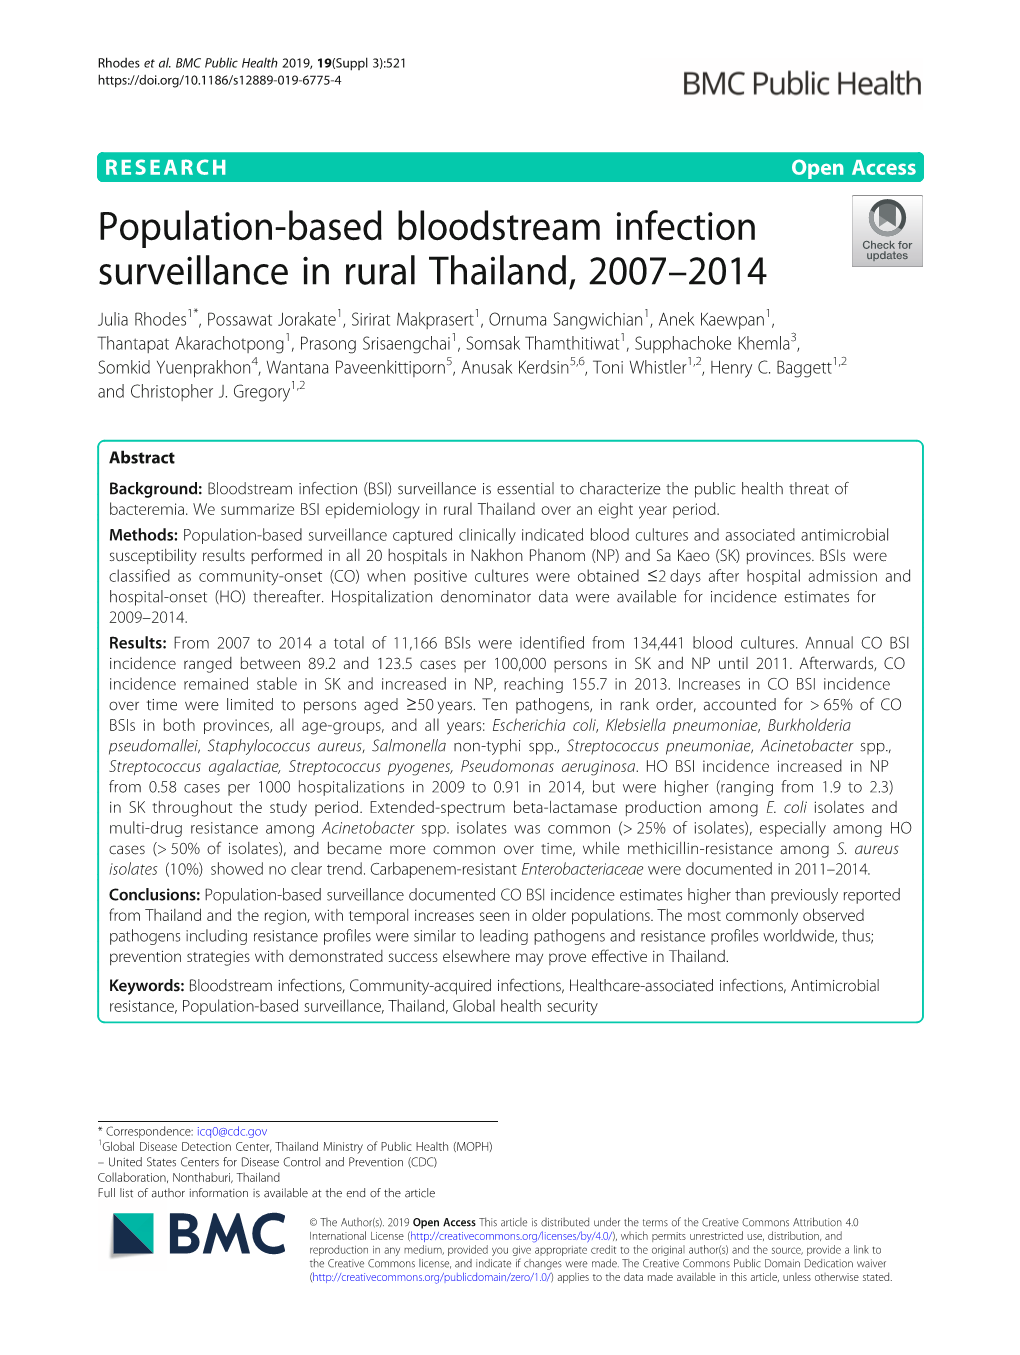 Population-Based Bloodstream Infection Surveillance in Rural